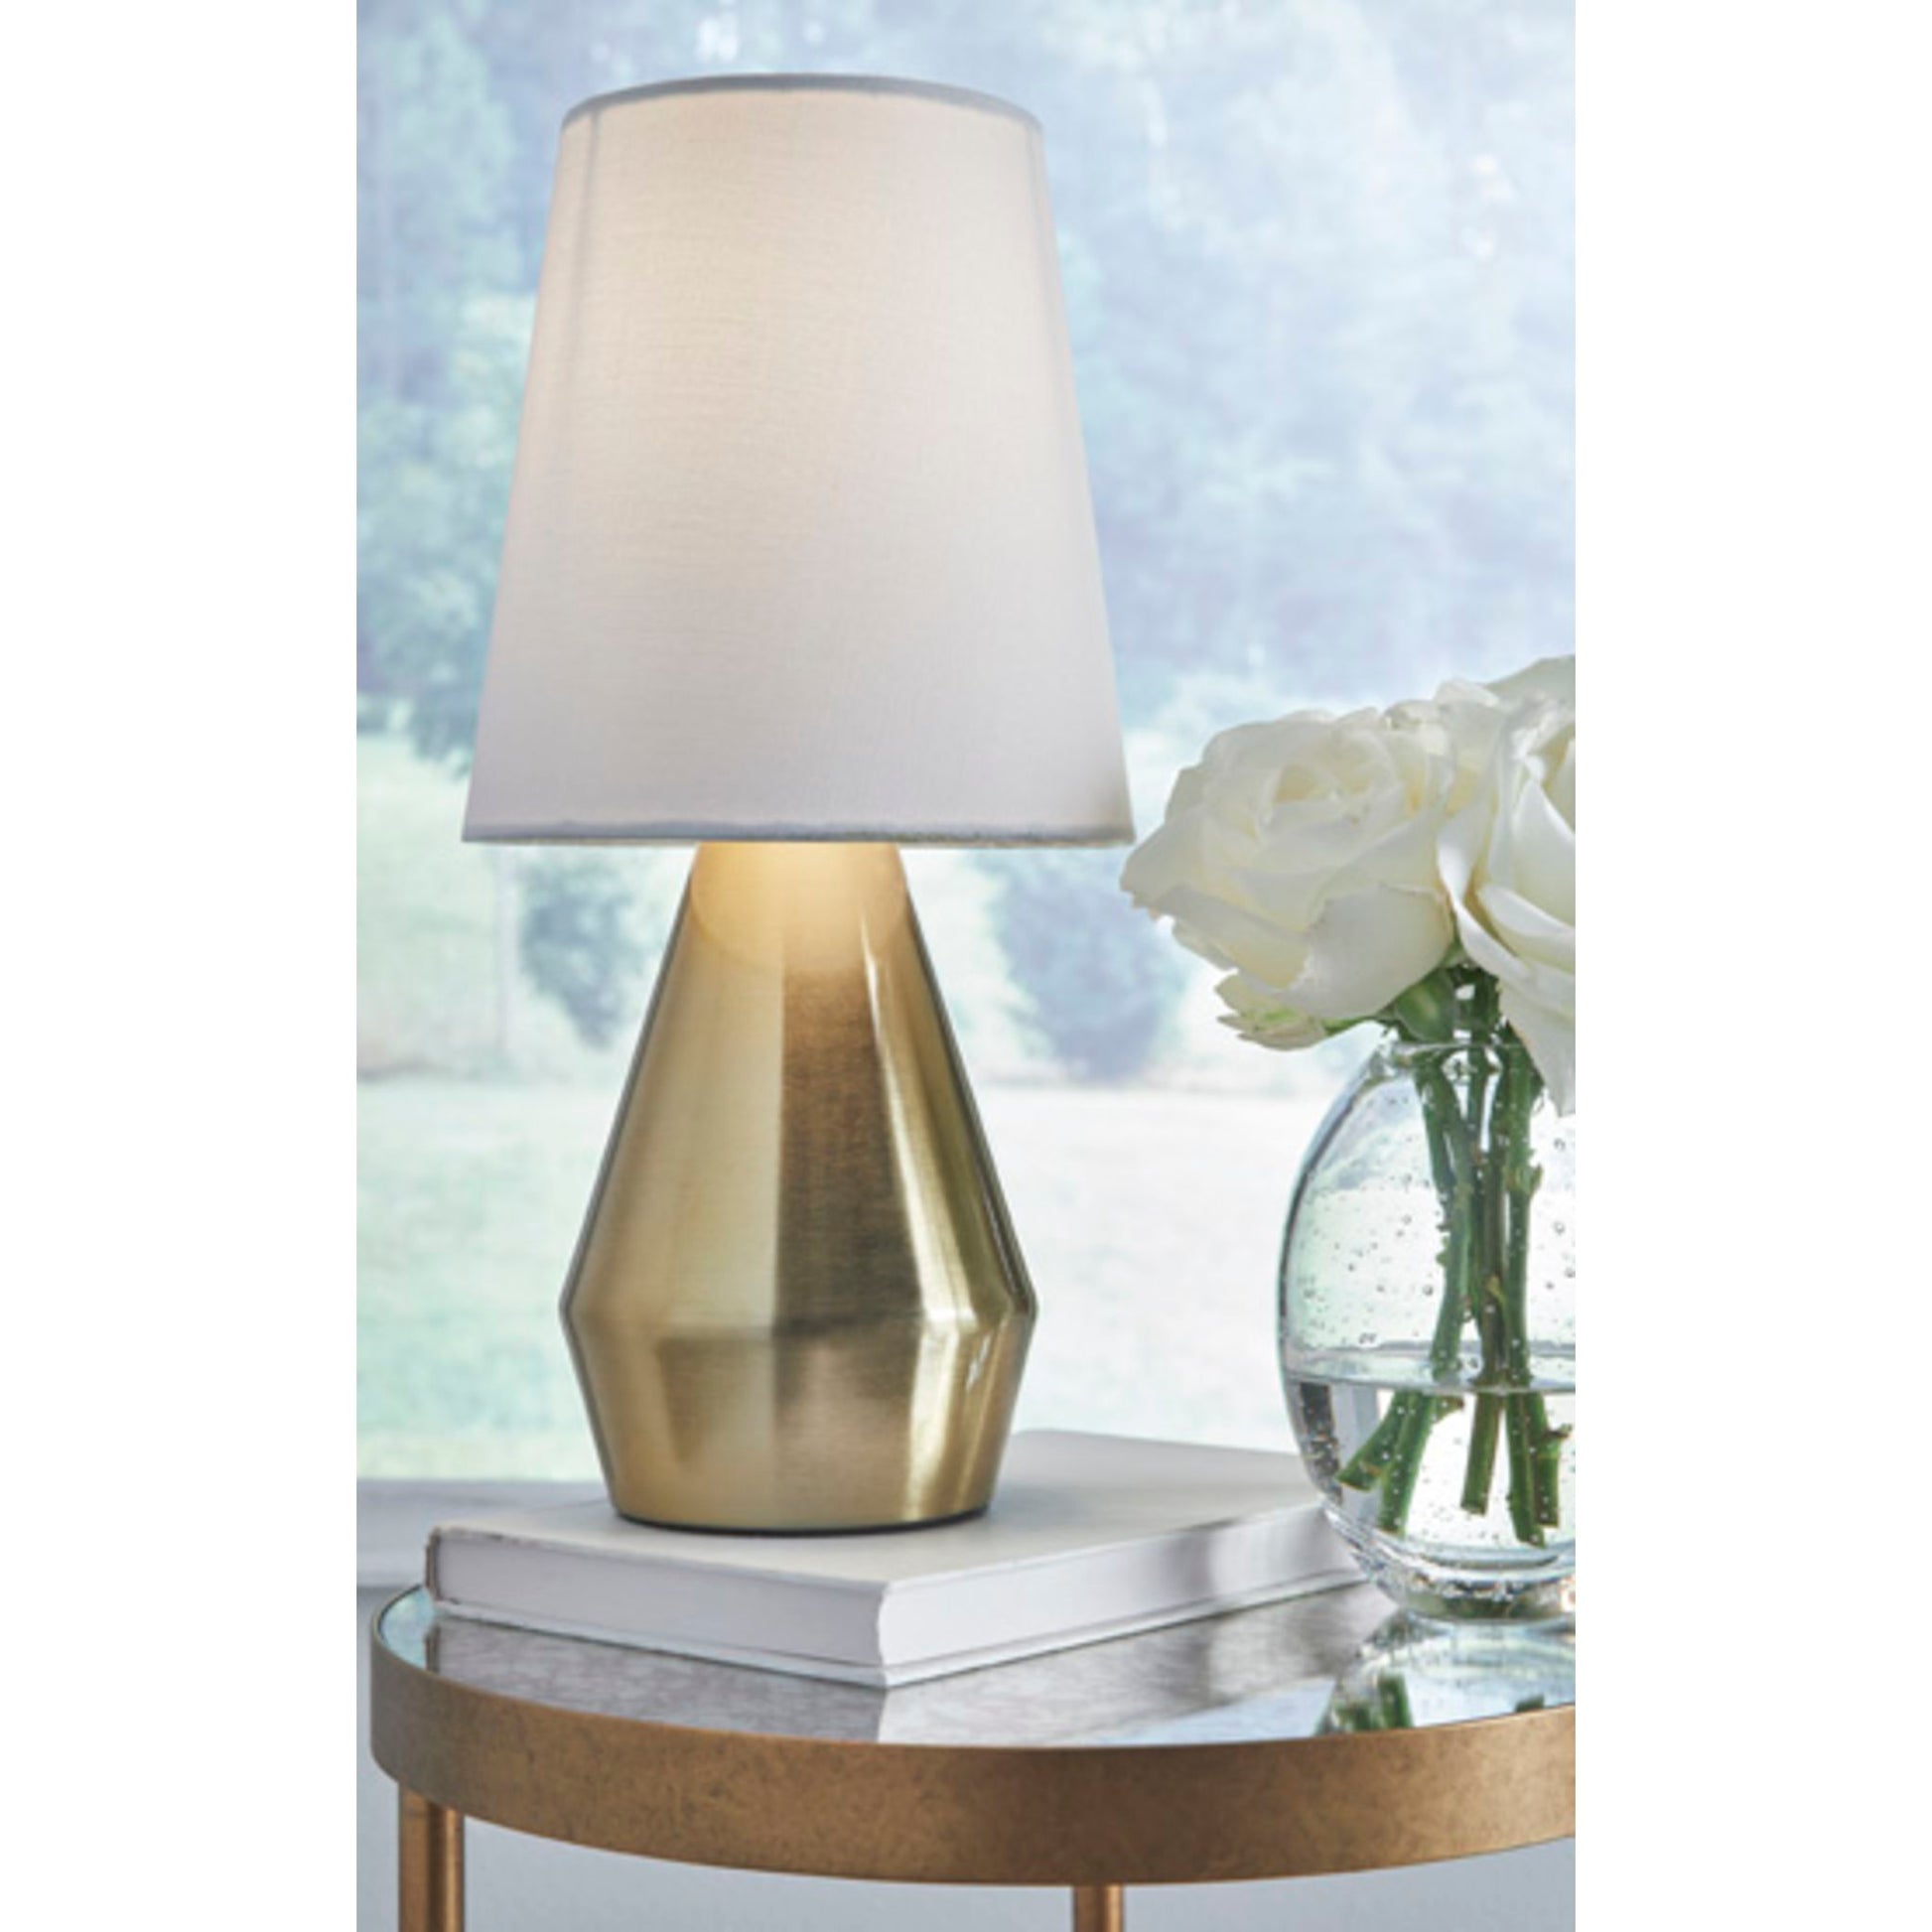 Lanry Table Lamp 14.50"